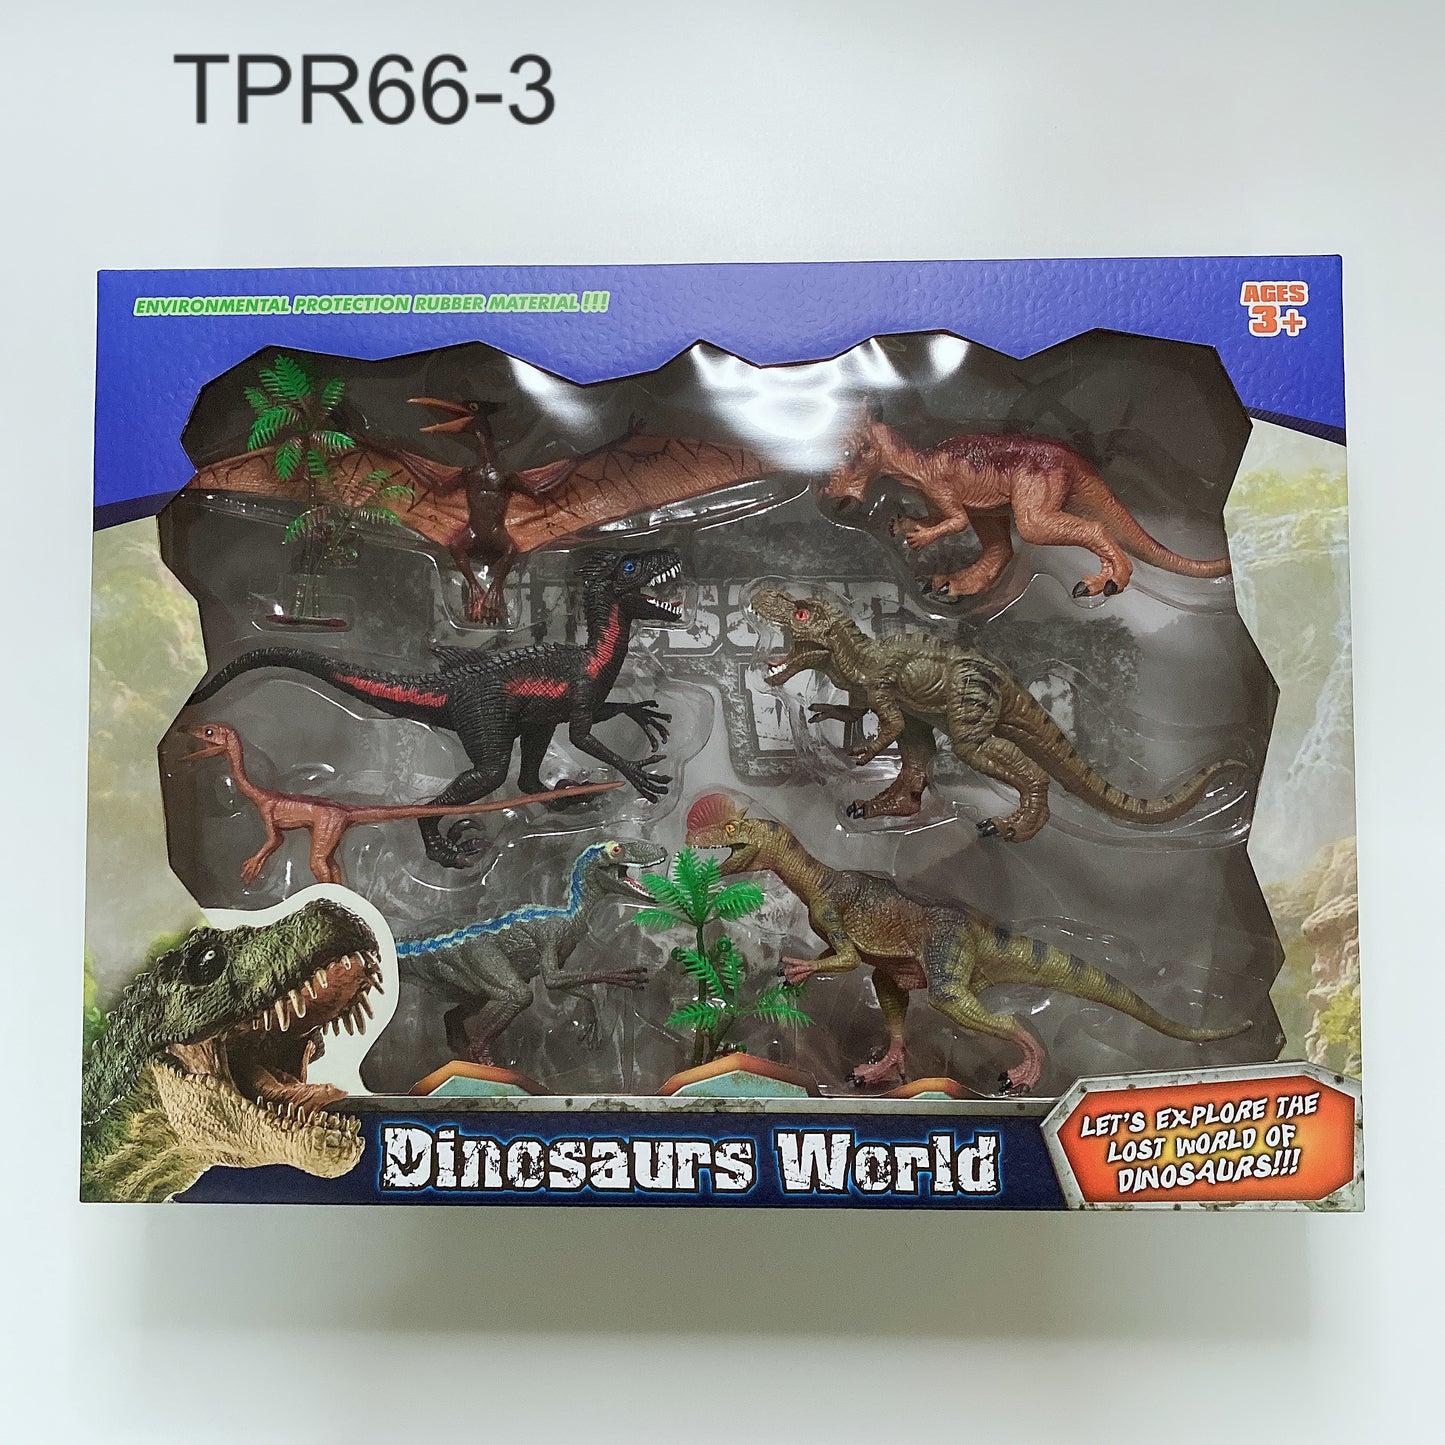 Dinosaur Models Toys Small Gifts for Children